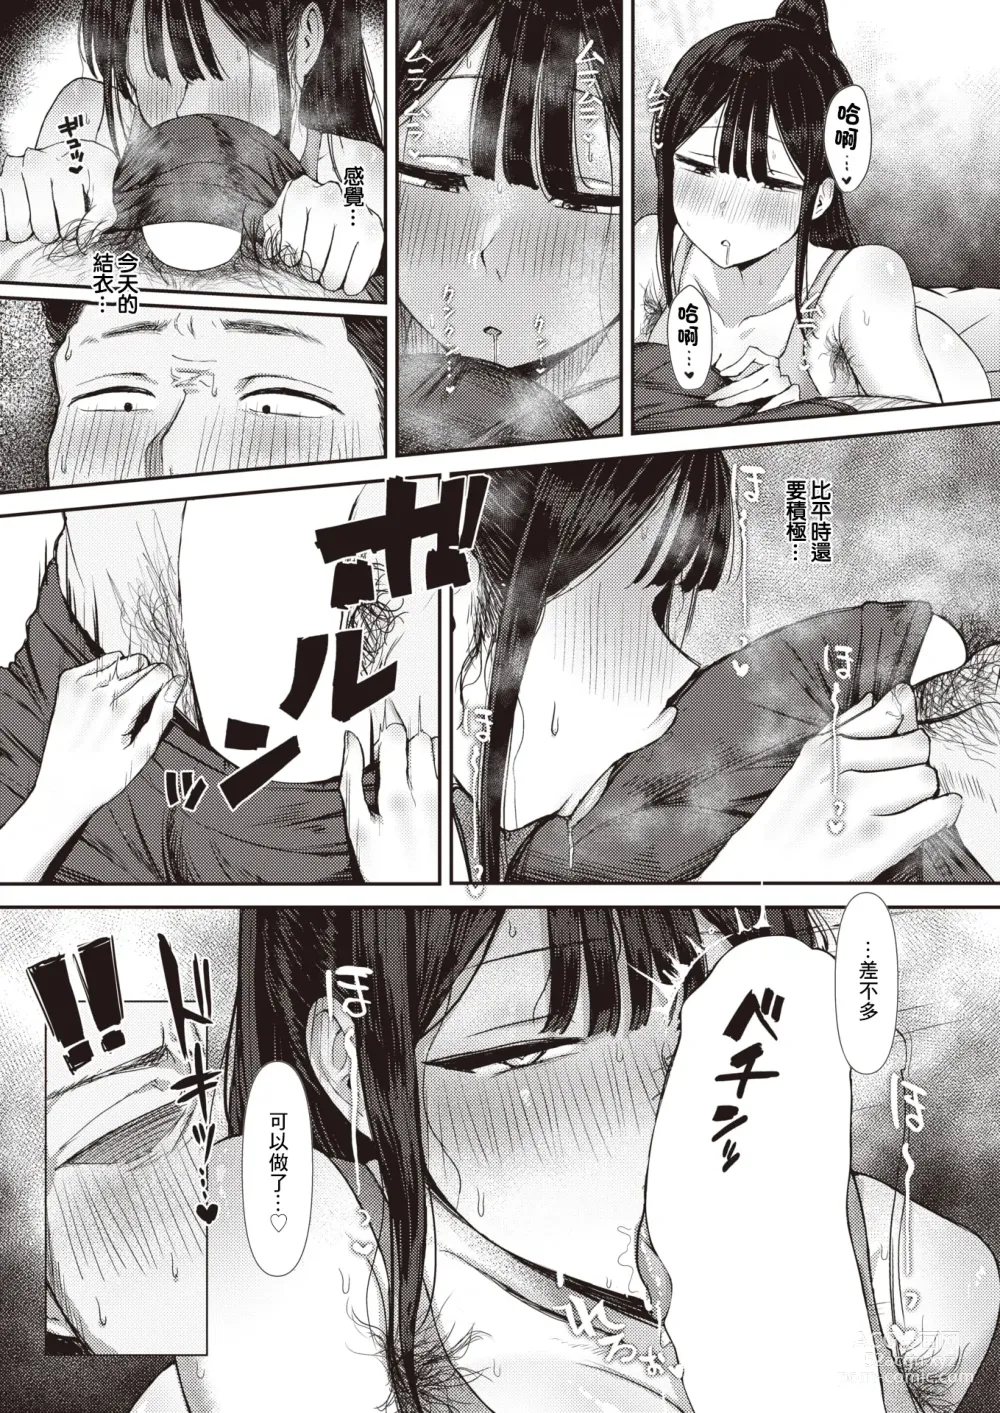 Page 6 of manga Haetete Hoshii.